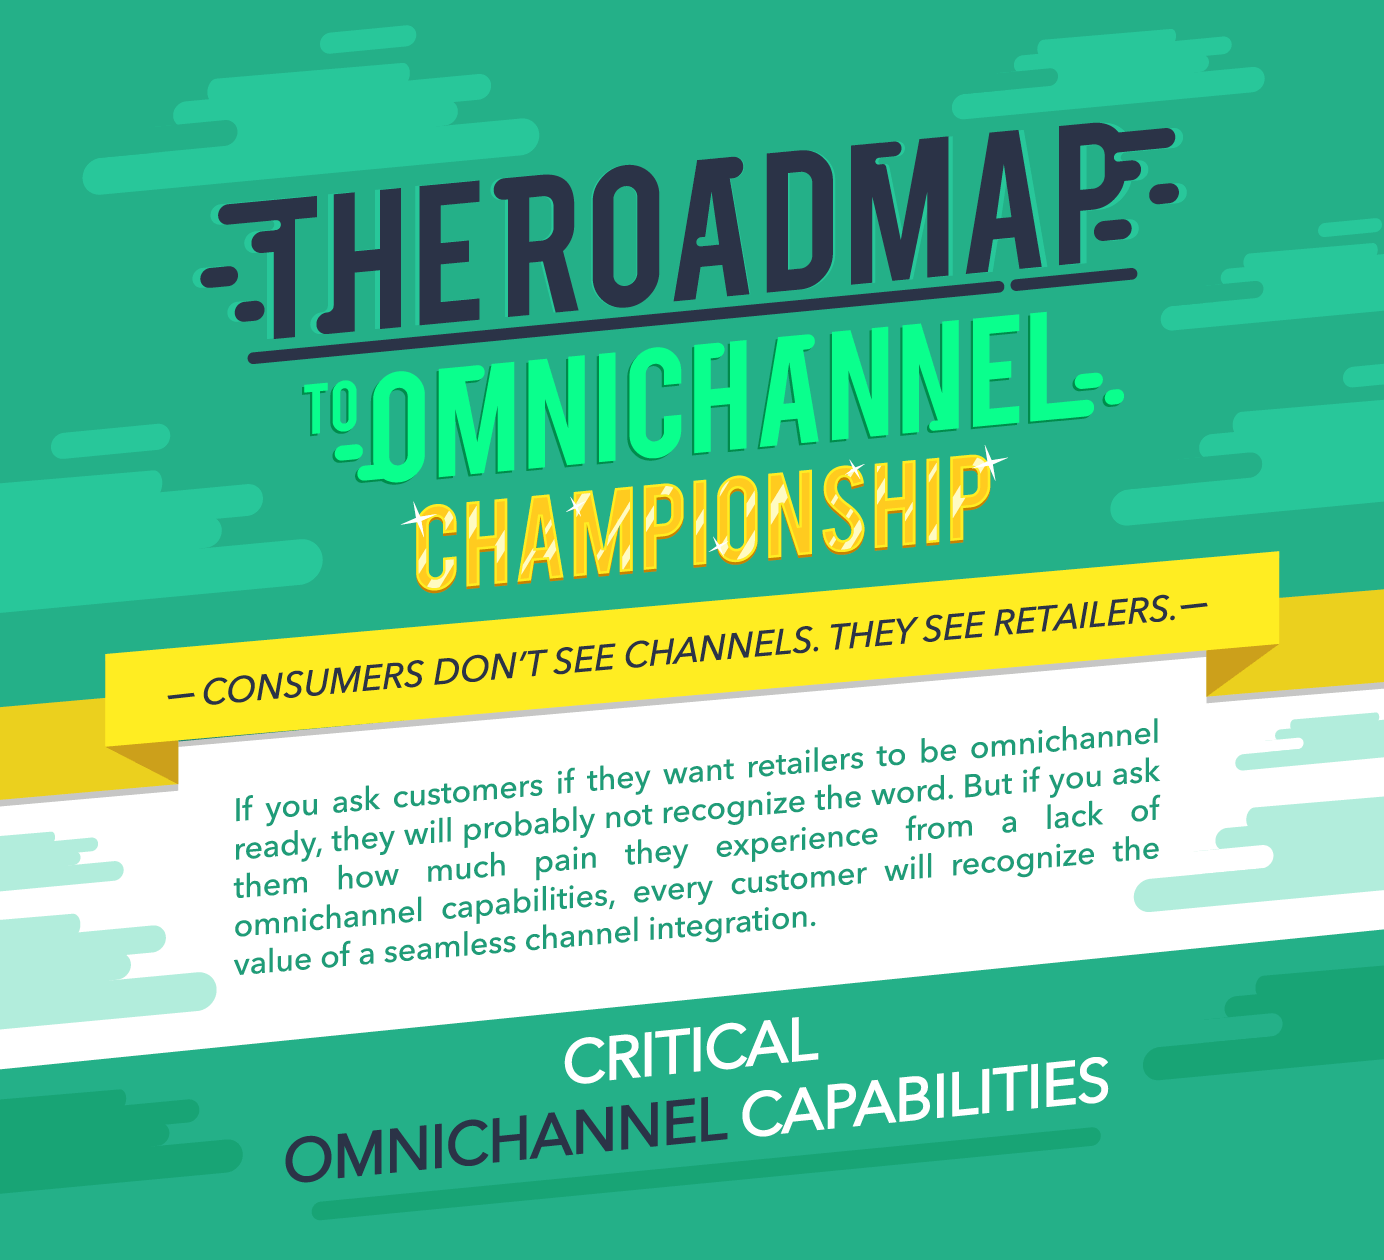 Infographic_Roadmap to omnichannel championship_EN.png